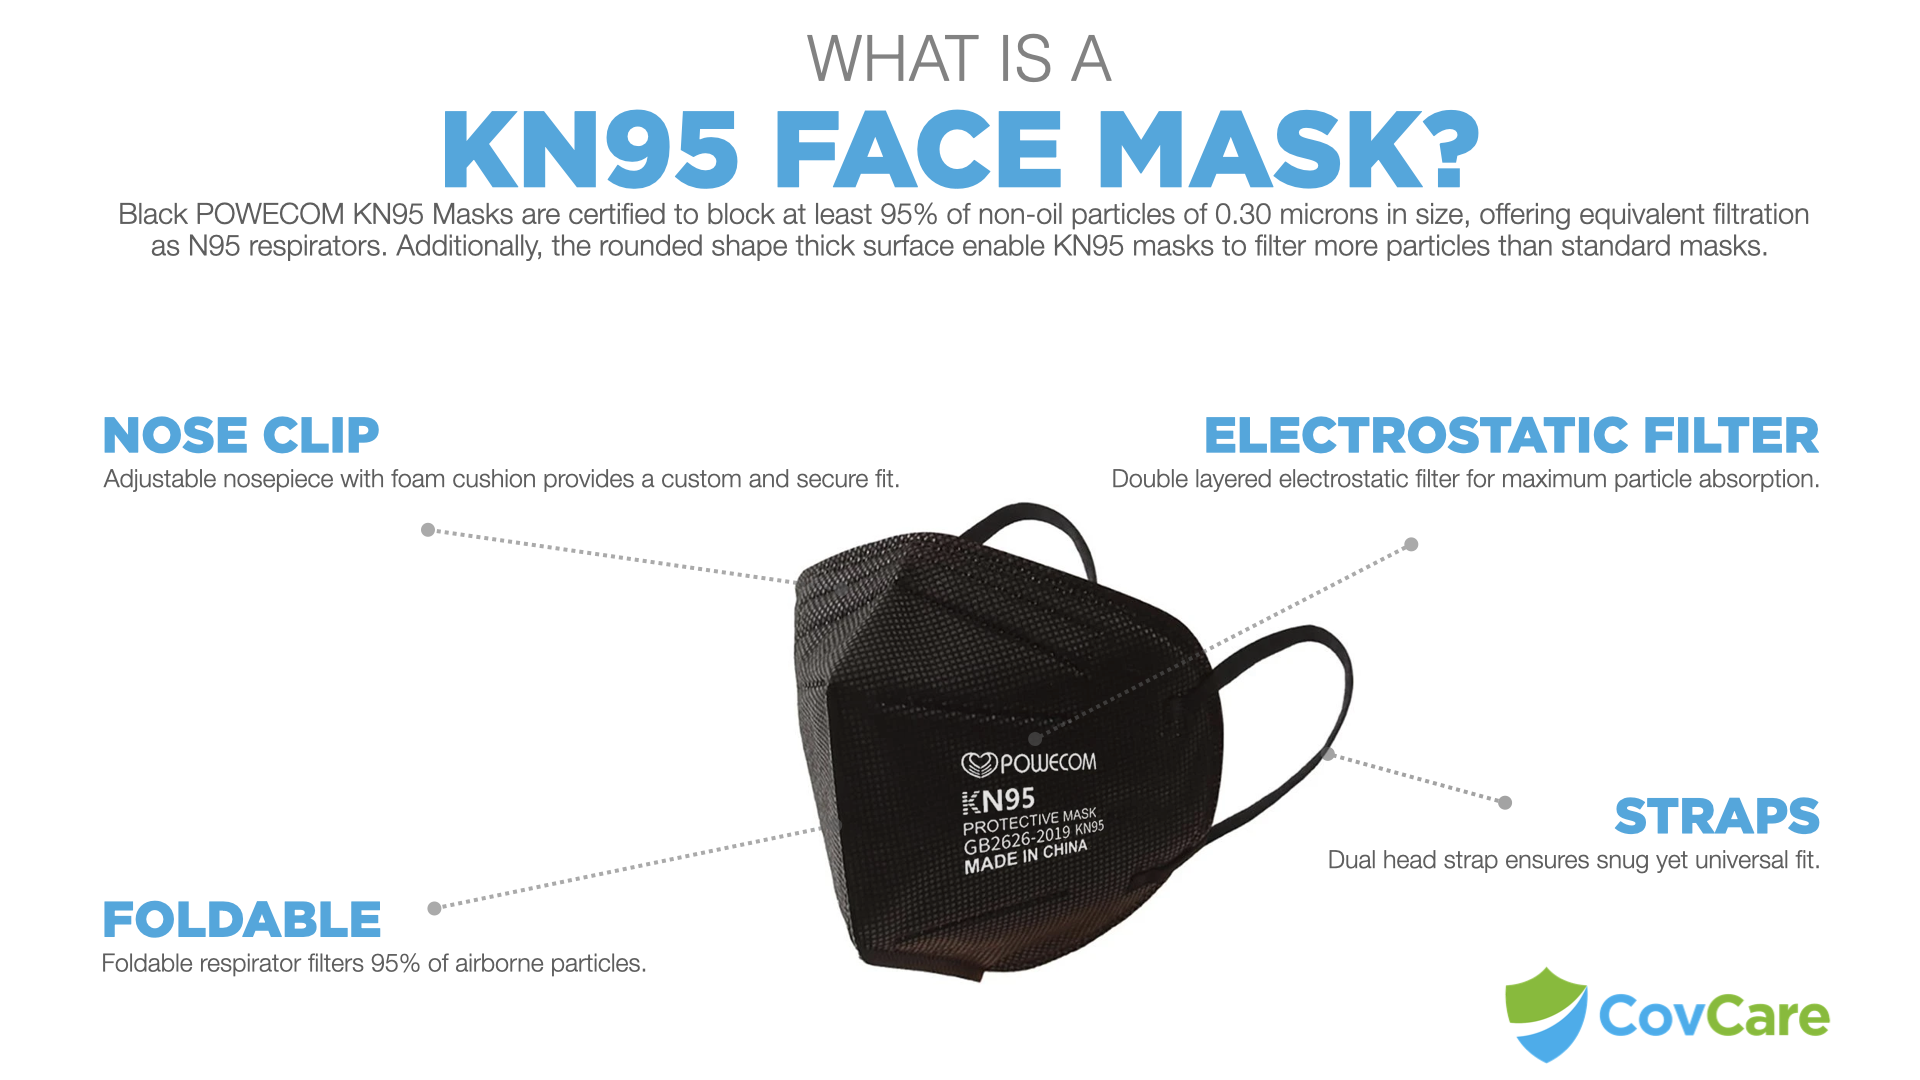 Buy Black KN95 Respirators online, Black KN95 Masks in bulk, Where to buy Black POWECOM facemasks online, Black Face Masks, What is a black KN95 face mask?